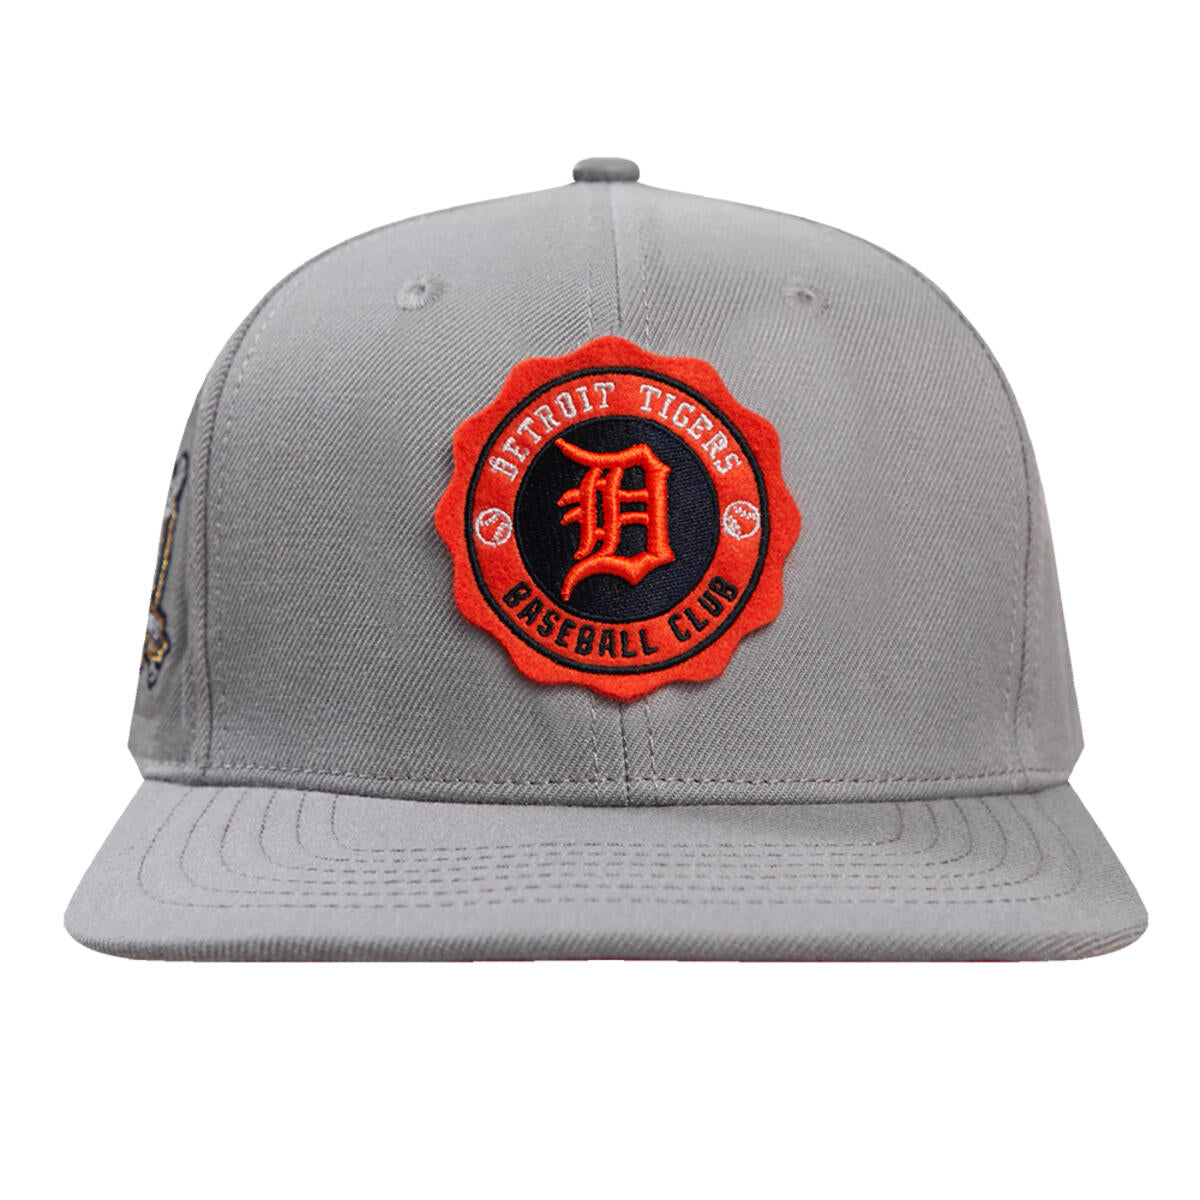 Pro Standard - Detroit Tigers Crest Emblem Wool Snapback Hat - Gray